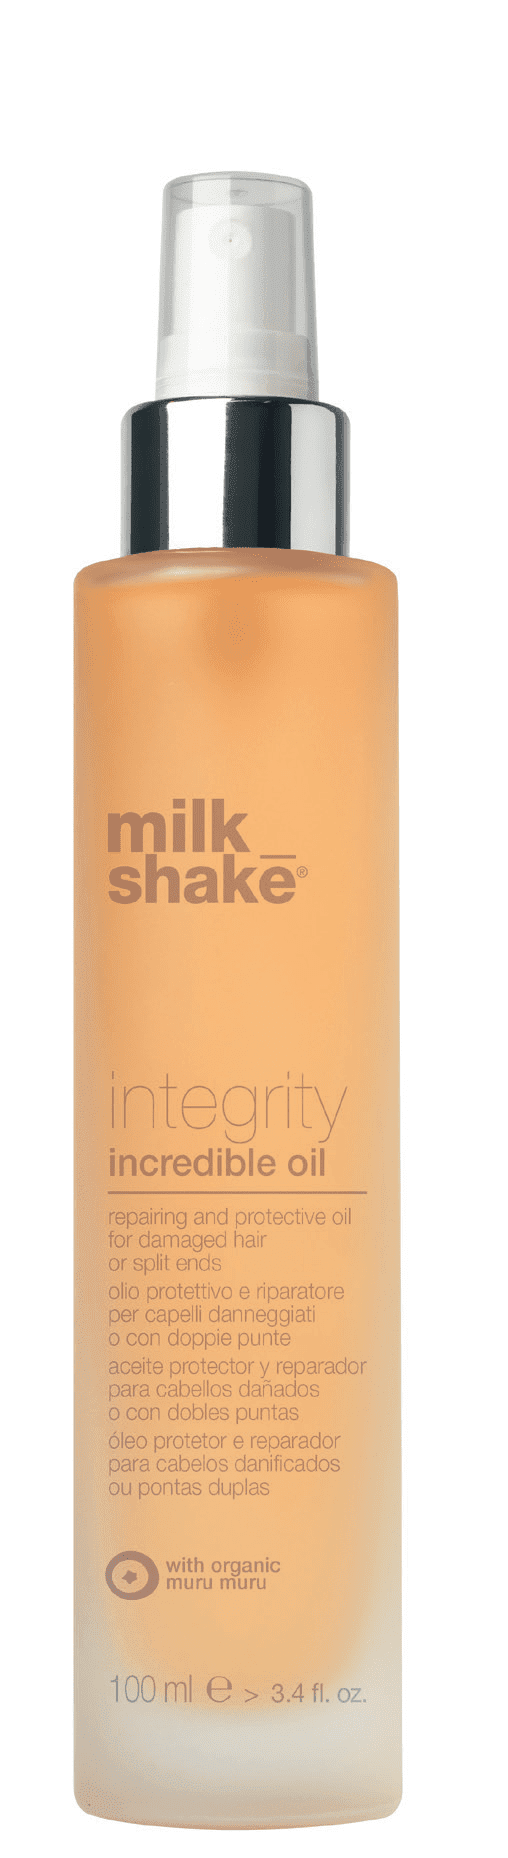 milk_shake Integrity Incredible Oil 100ml